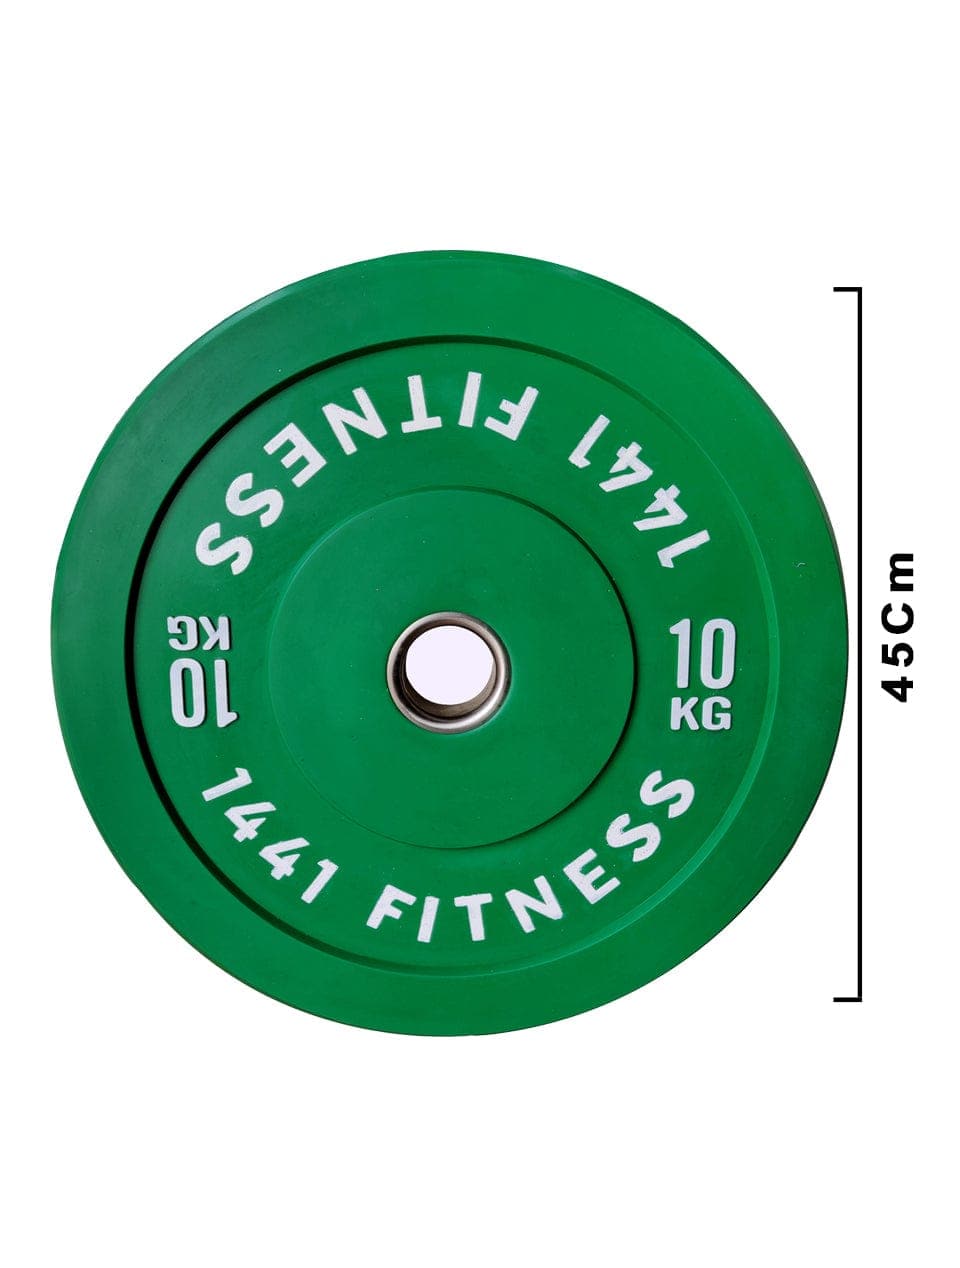 PRSAE Plates & Bars 10 KG 1441 Fitness Color Bumper Plates 5 Kg to 25 Kg